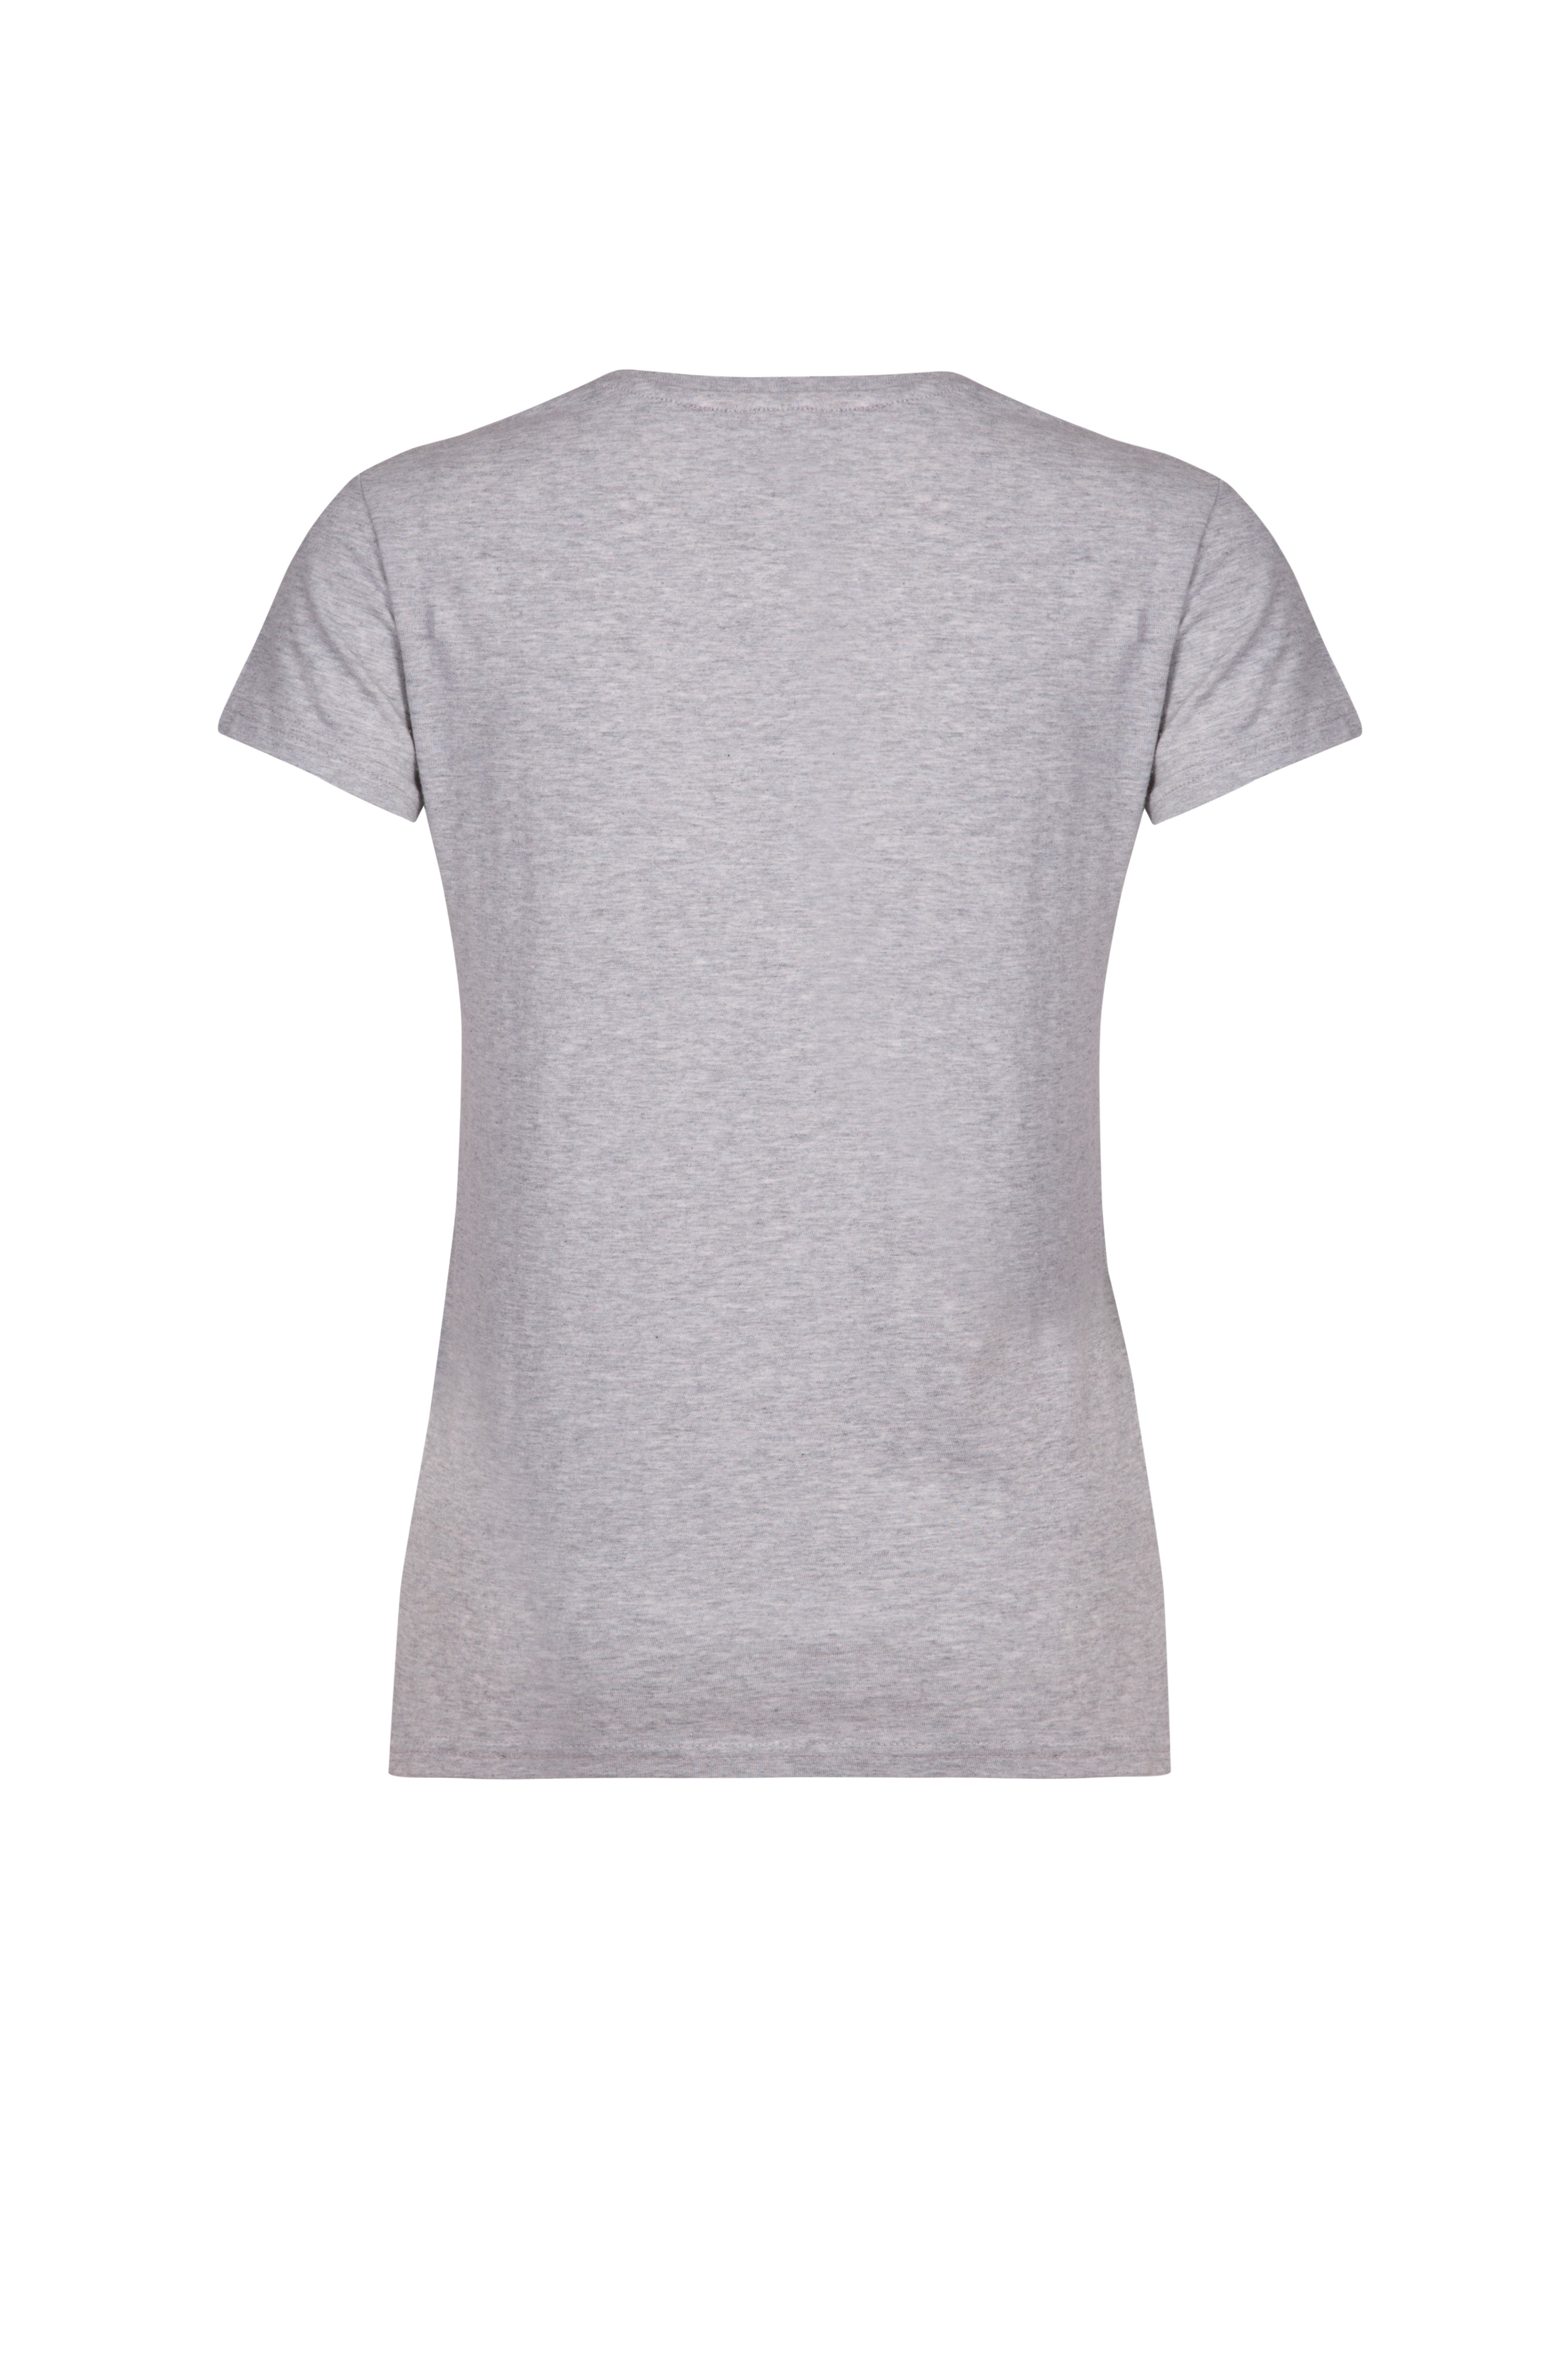 Back of grey organic cotton women's basic fit t-shirt